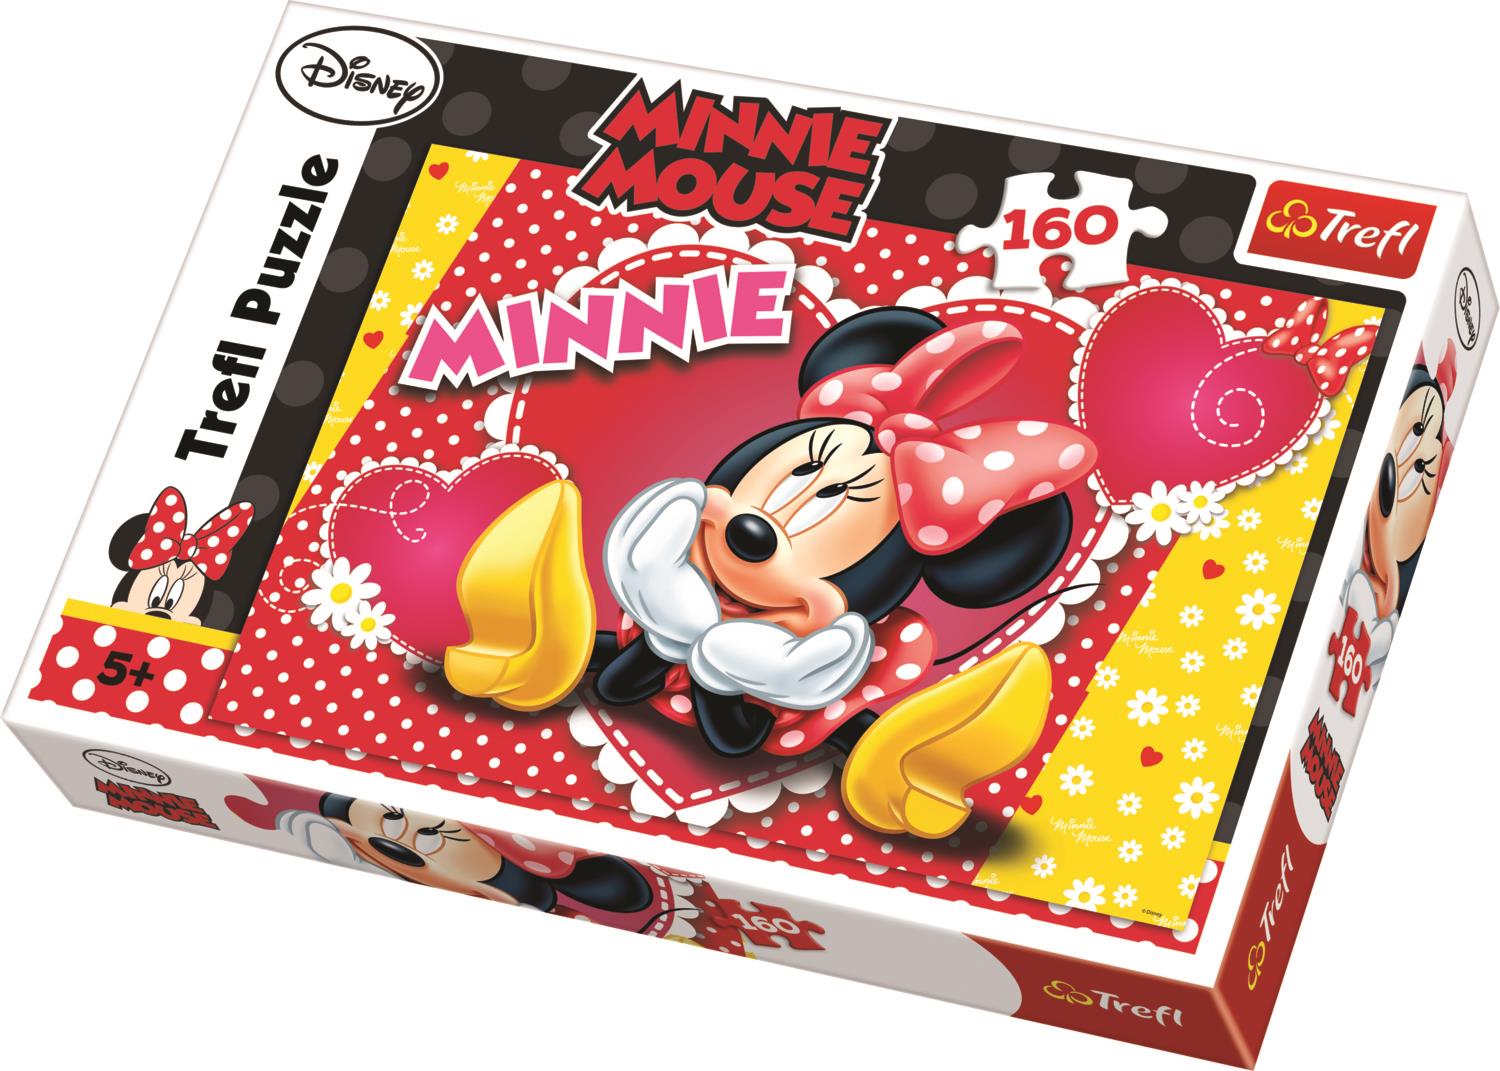 Trefl Çocuk Puzzle 15220 Minnie Mouse Thinking Minnie, Disney 160 Parça Puzzle